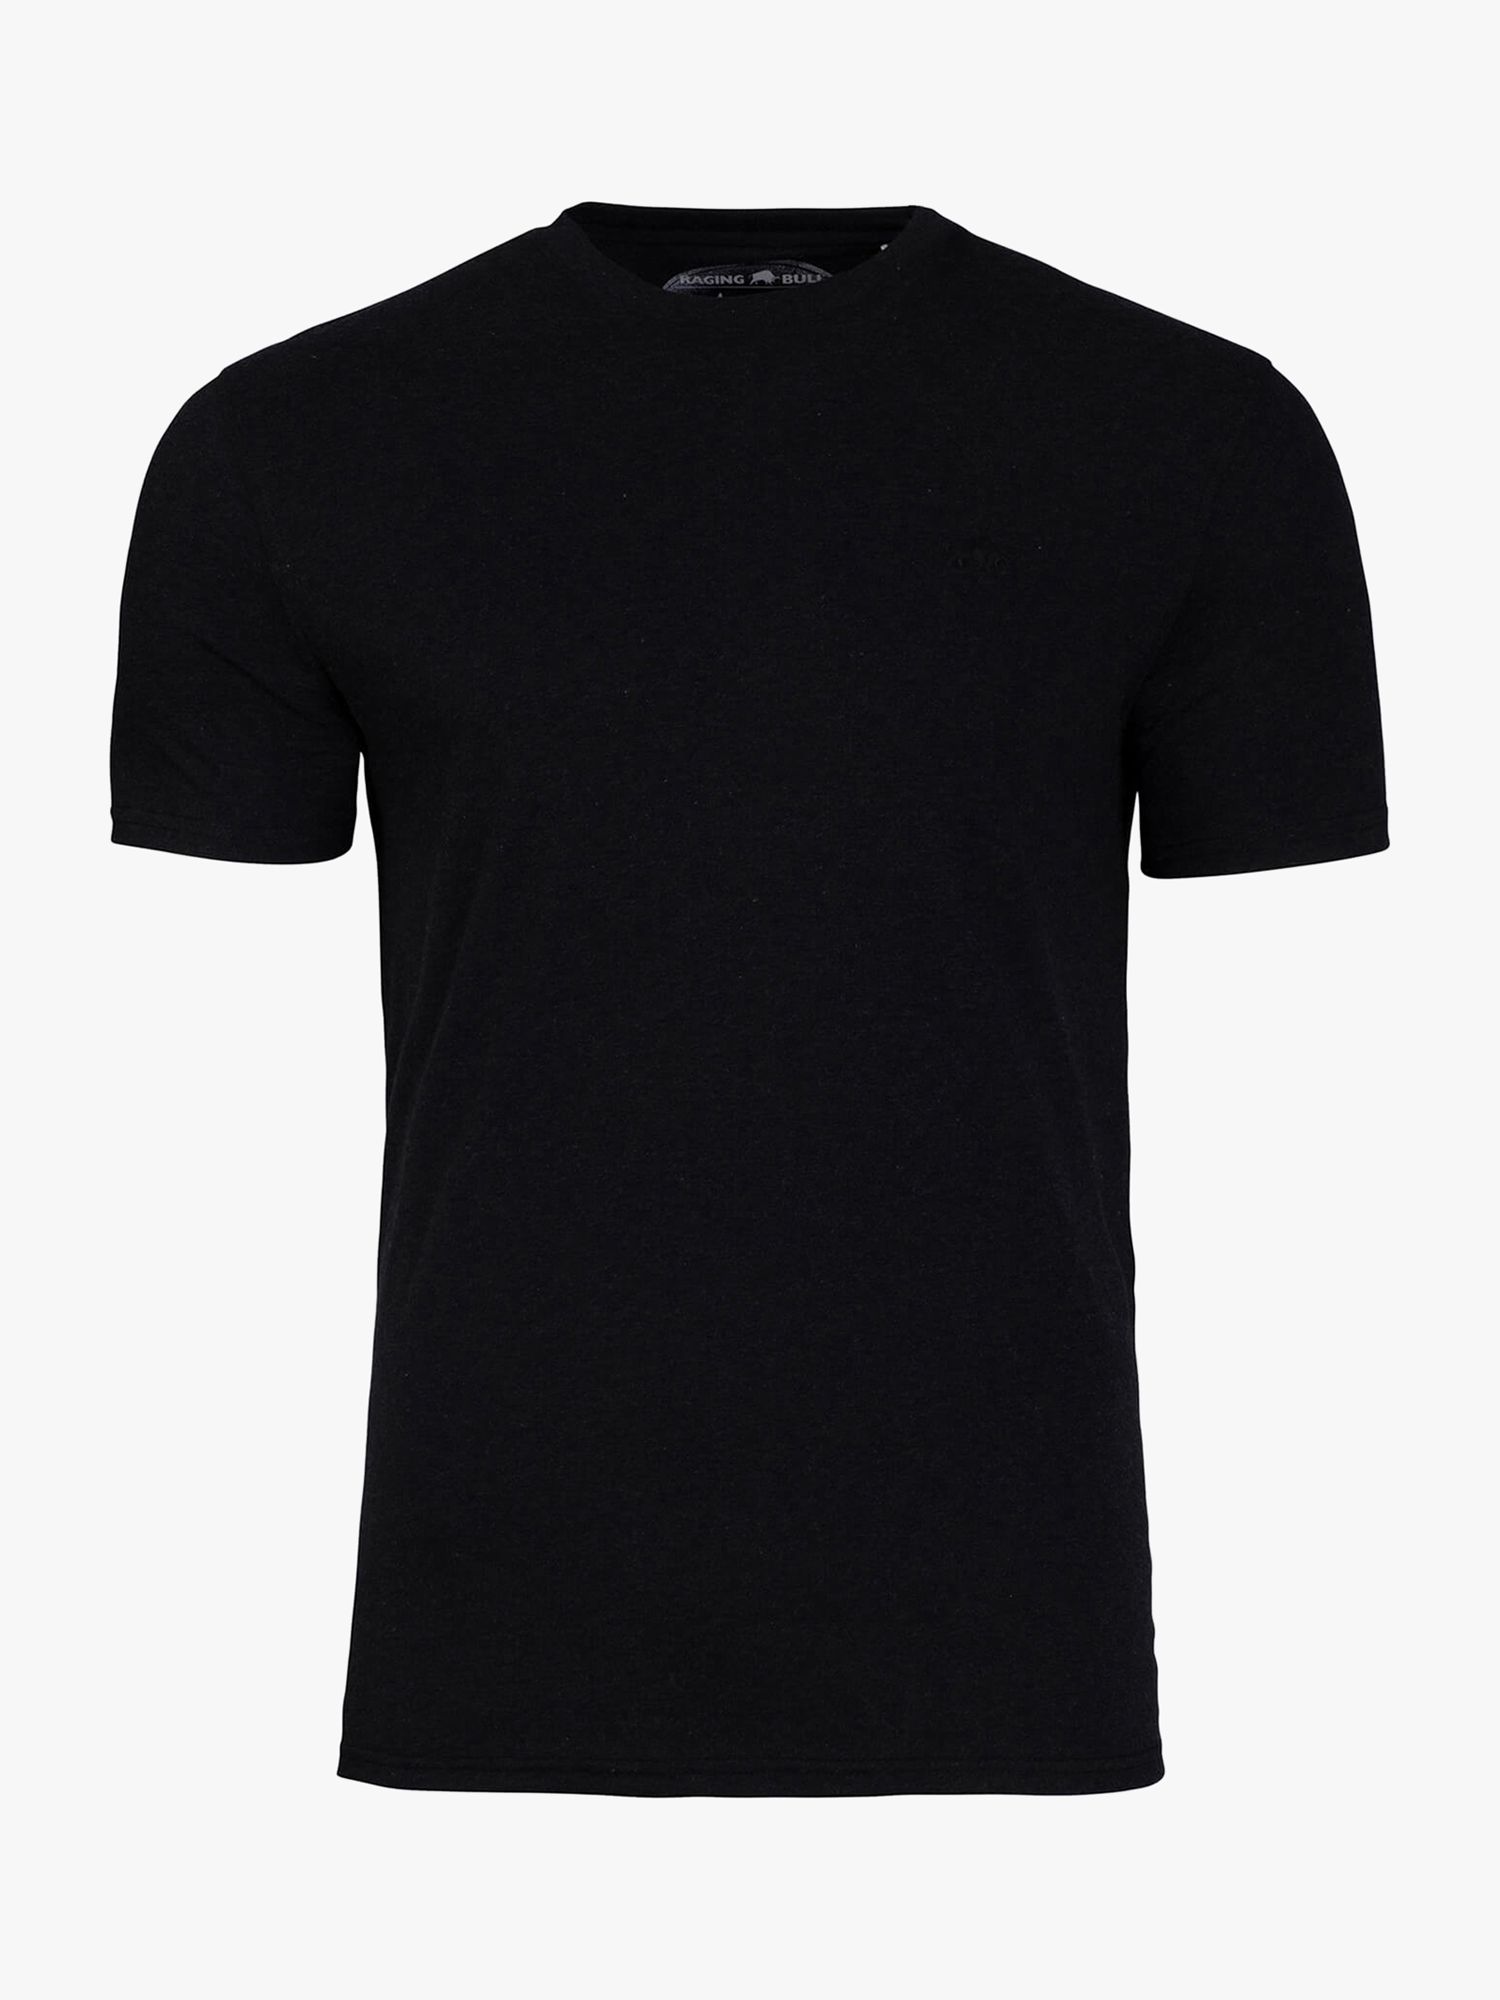 Raging Bull Classic Organic Cotton T-Shirt, Black at John Lewis & Partners